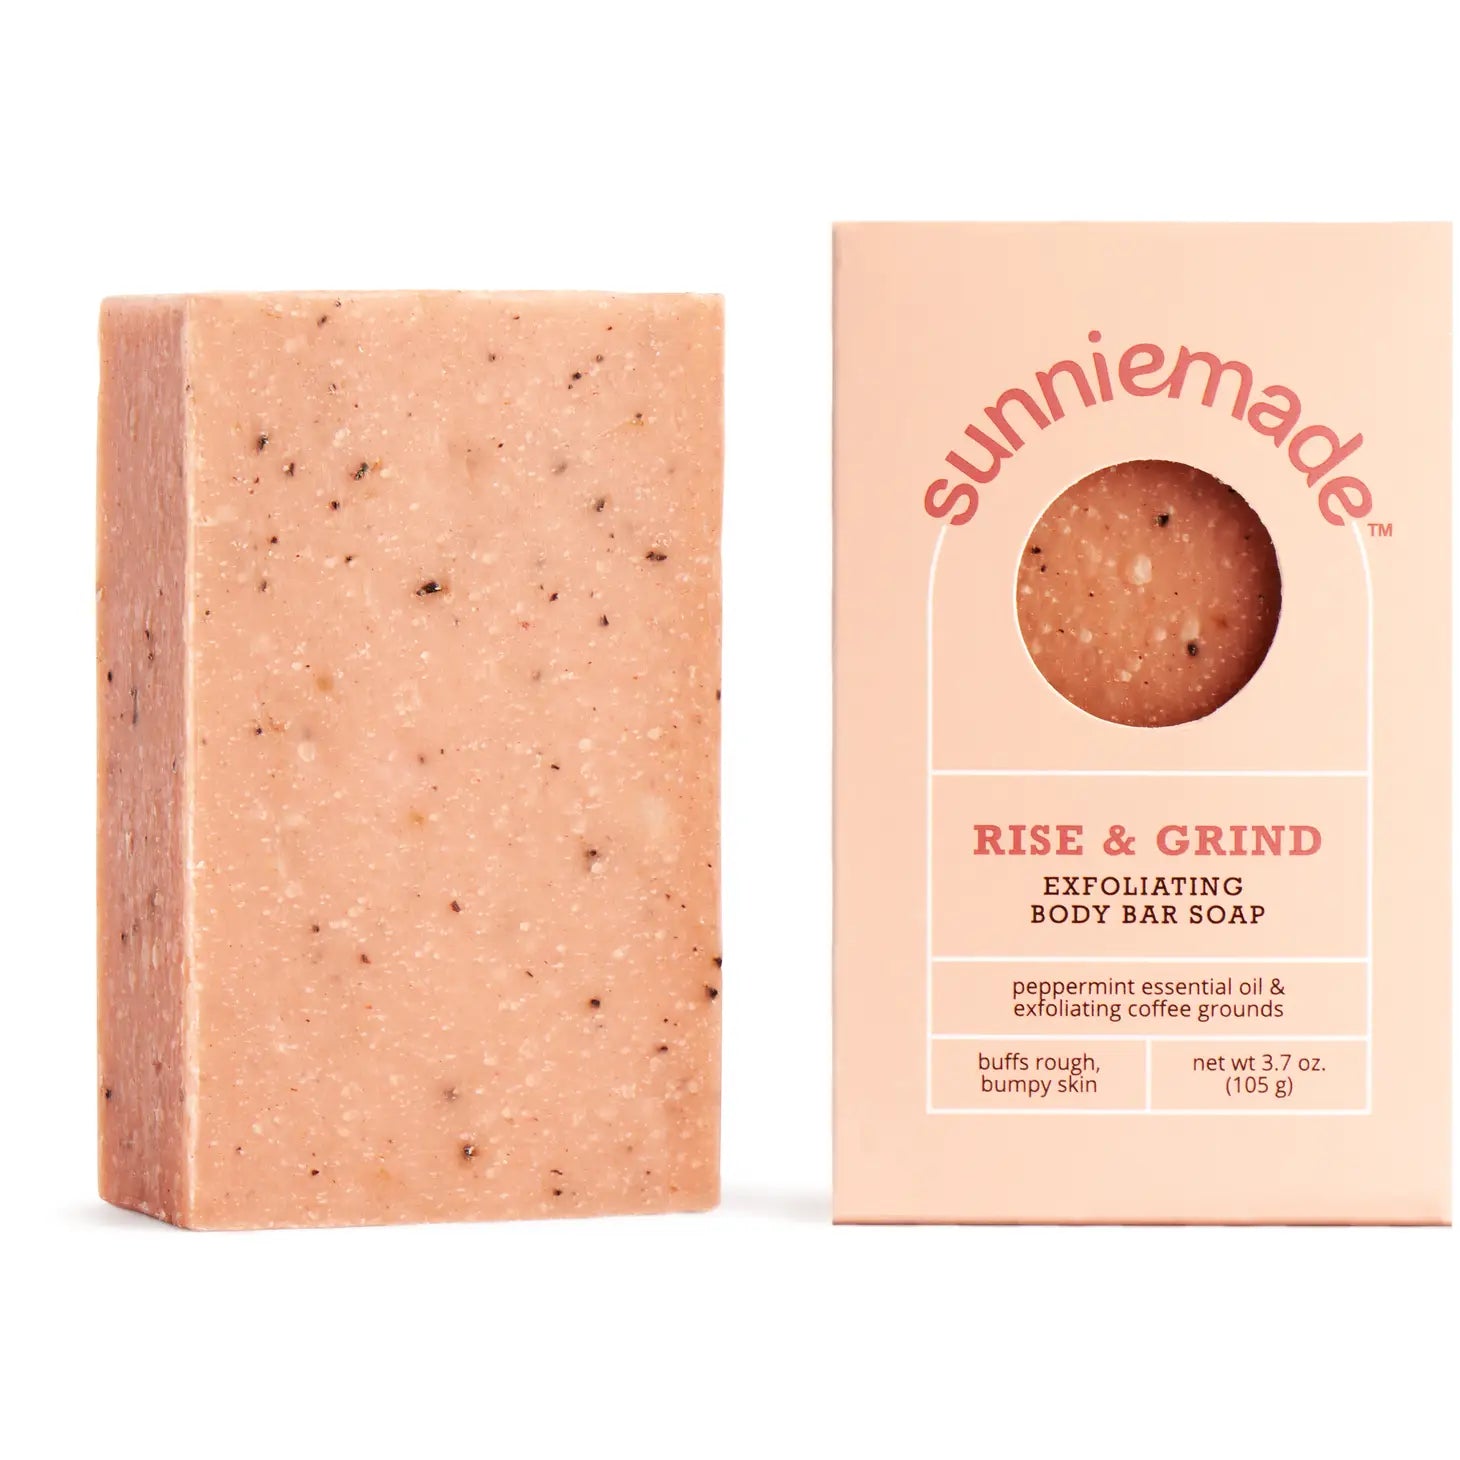 Sunniemade Rise & Grind Exfoliating Body Bar Soap